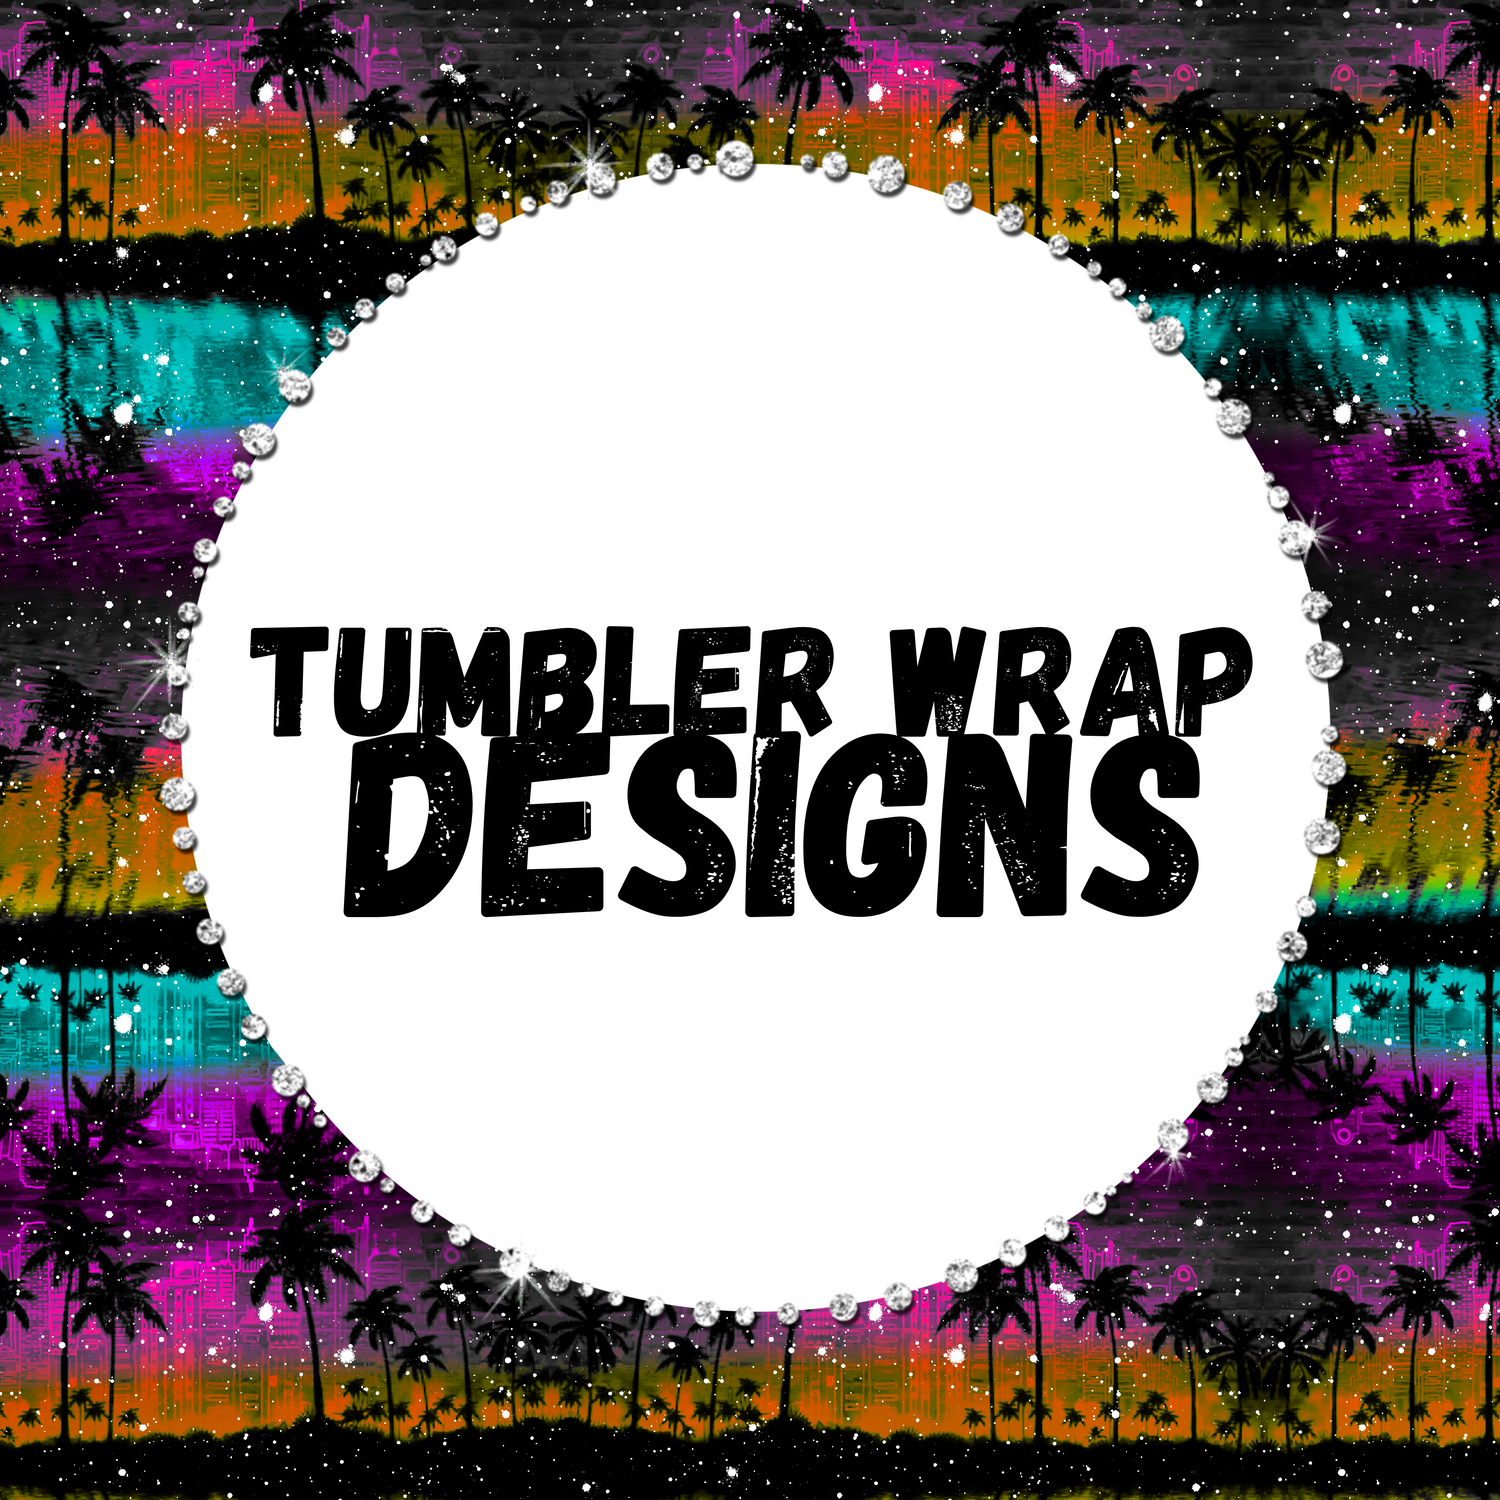 Tumbler Wraps Designs